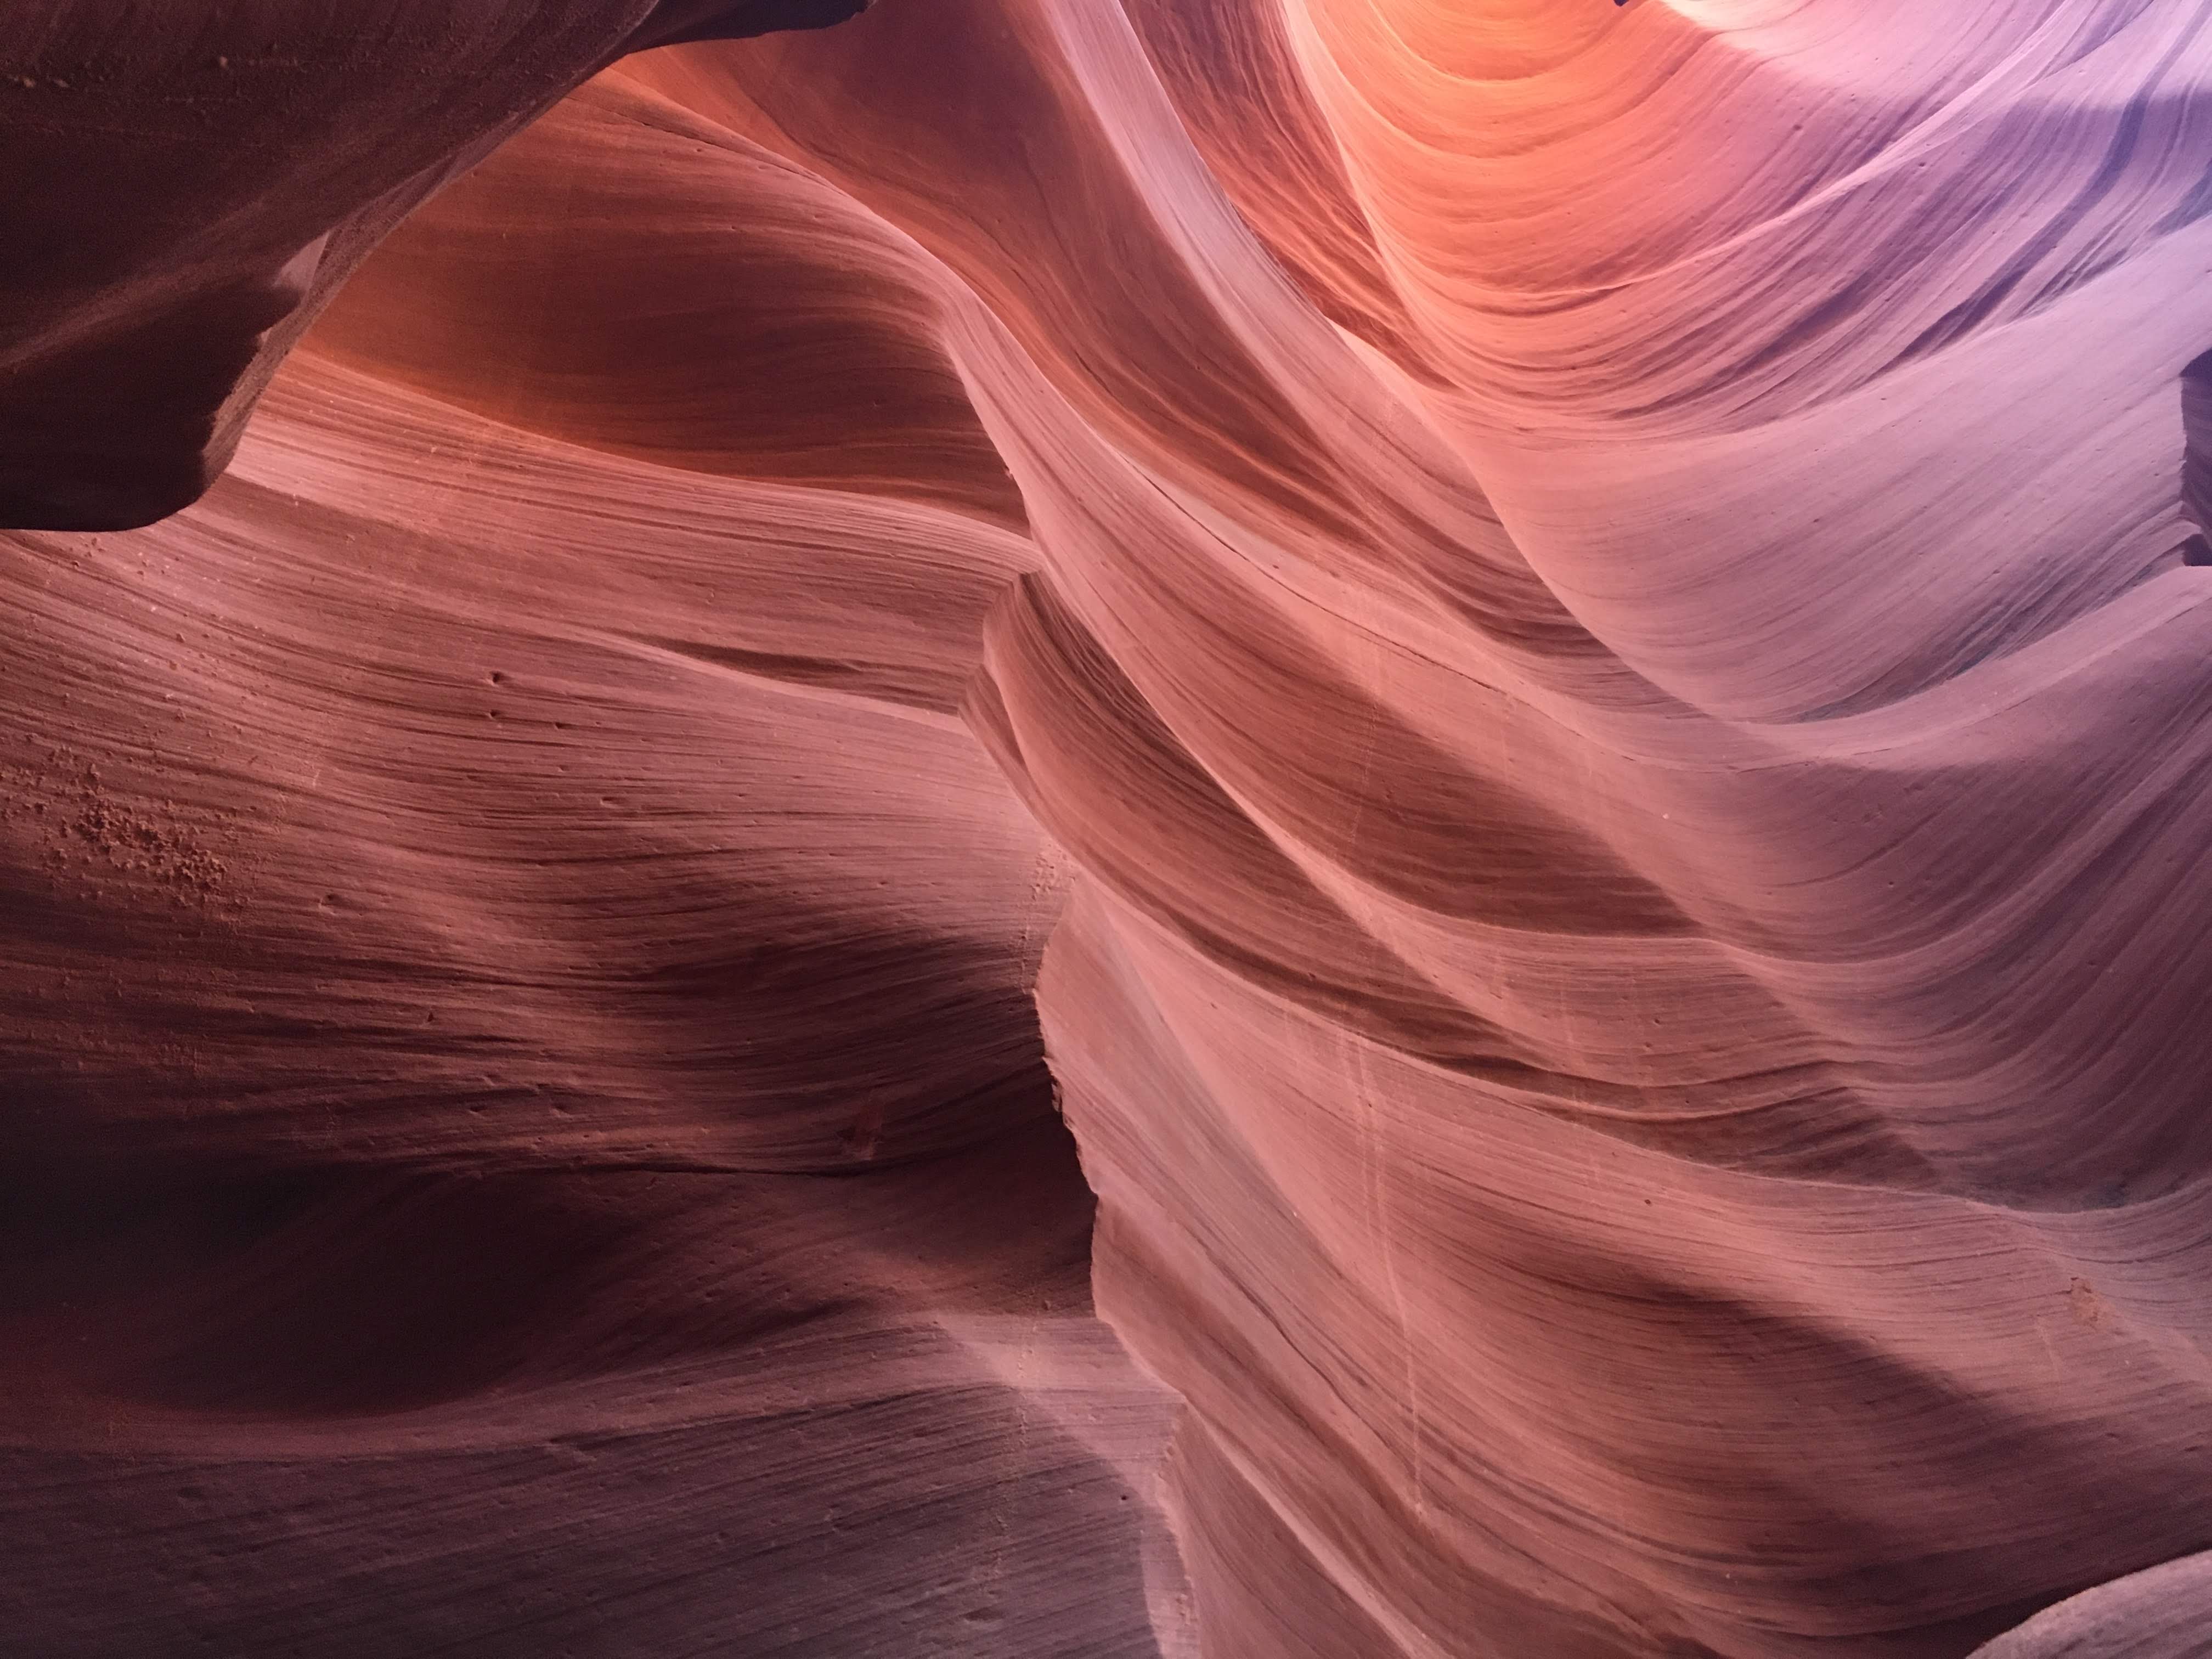 Antelope Canyon — astounding and otherworldly